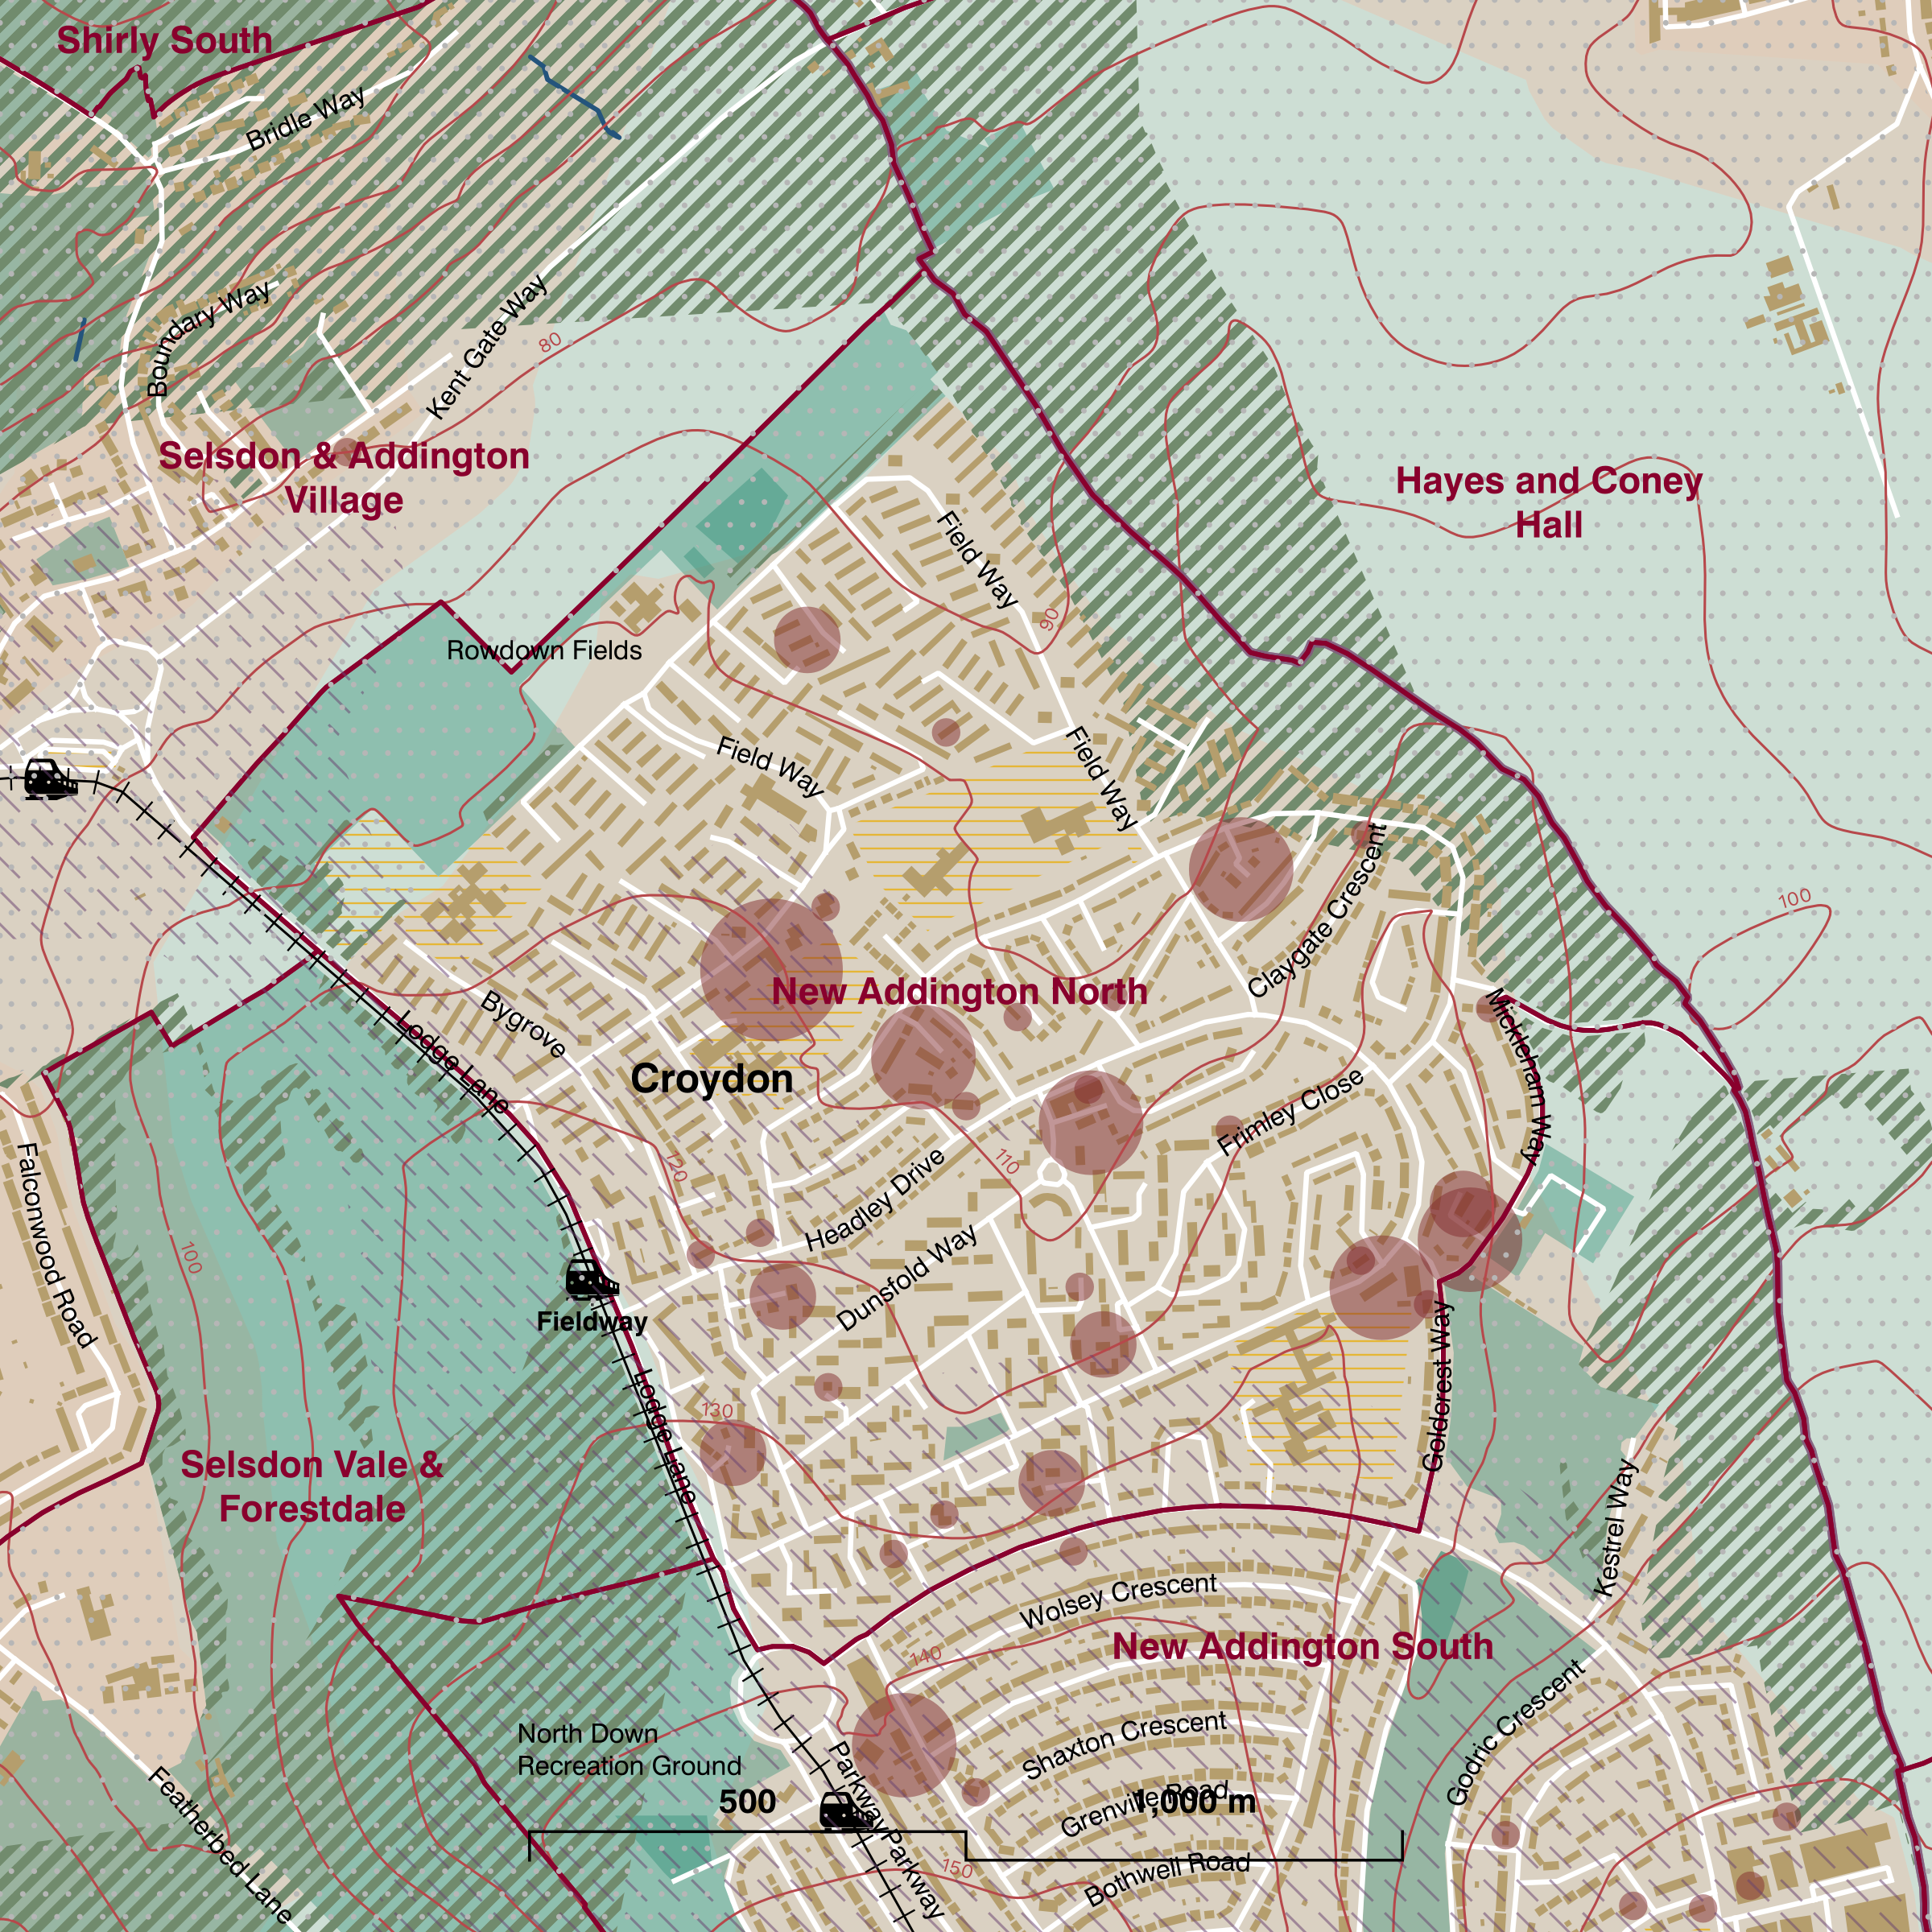 Map of New Addington North ward